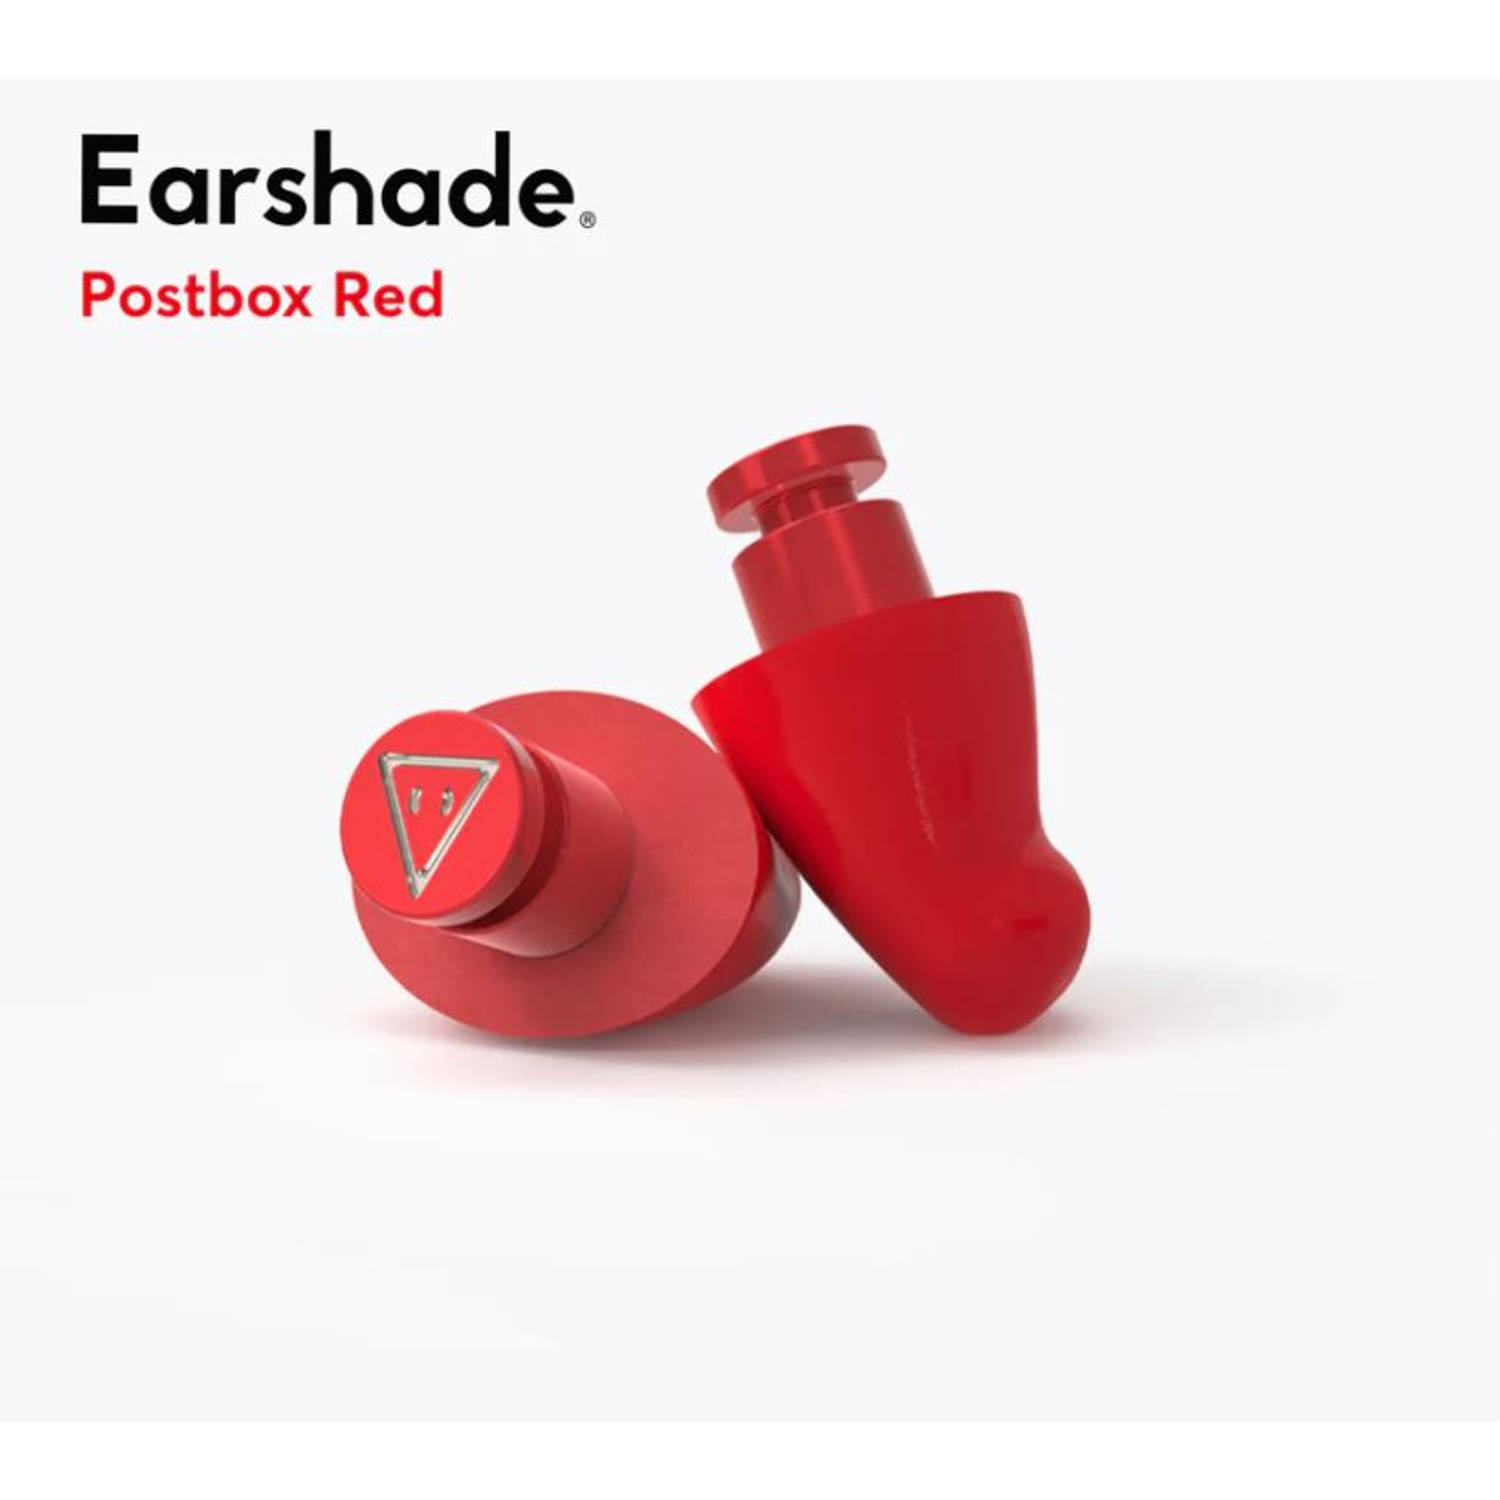 Flare Audio Earplugs Earshade Postbox Red